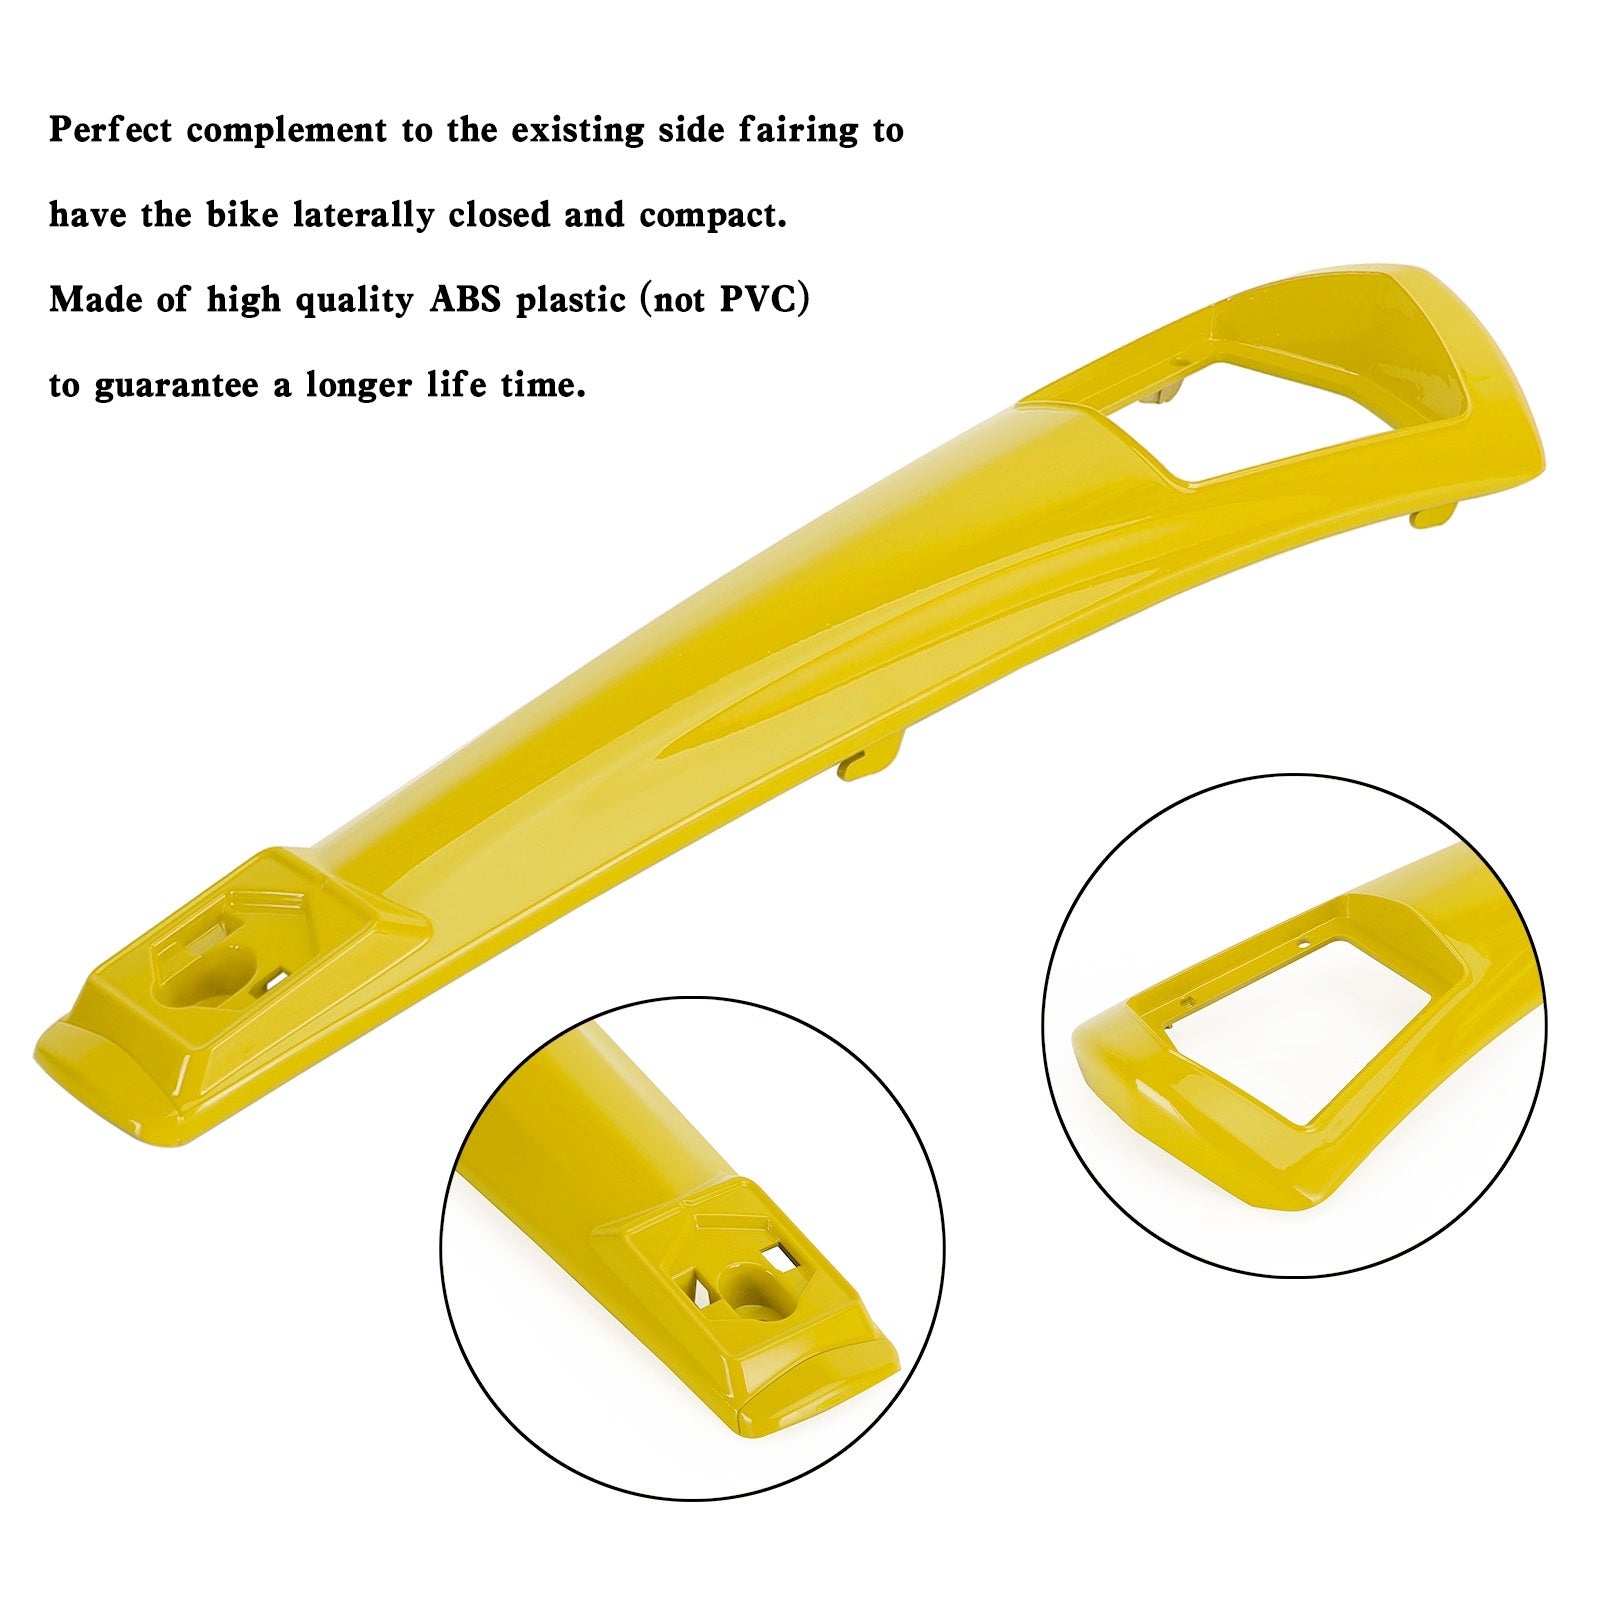 ABS Steering Horn Cover fairing For VESPA Sprint Primavera 125/150 2014-2021